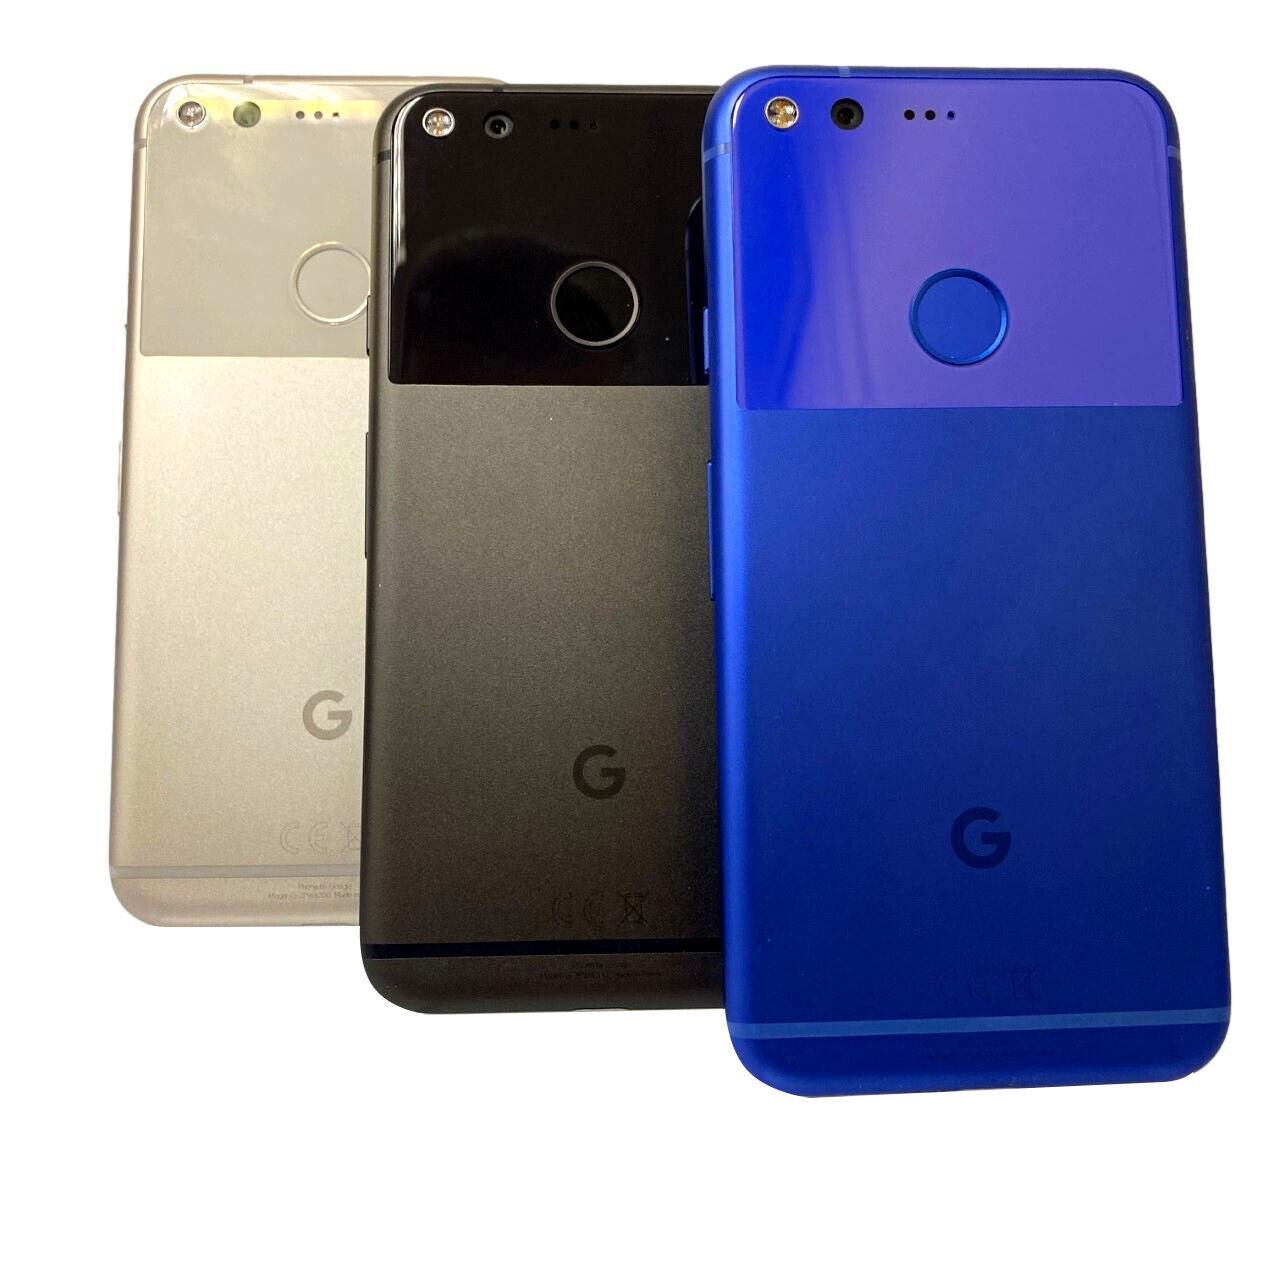 Google Pixel 1st Gen